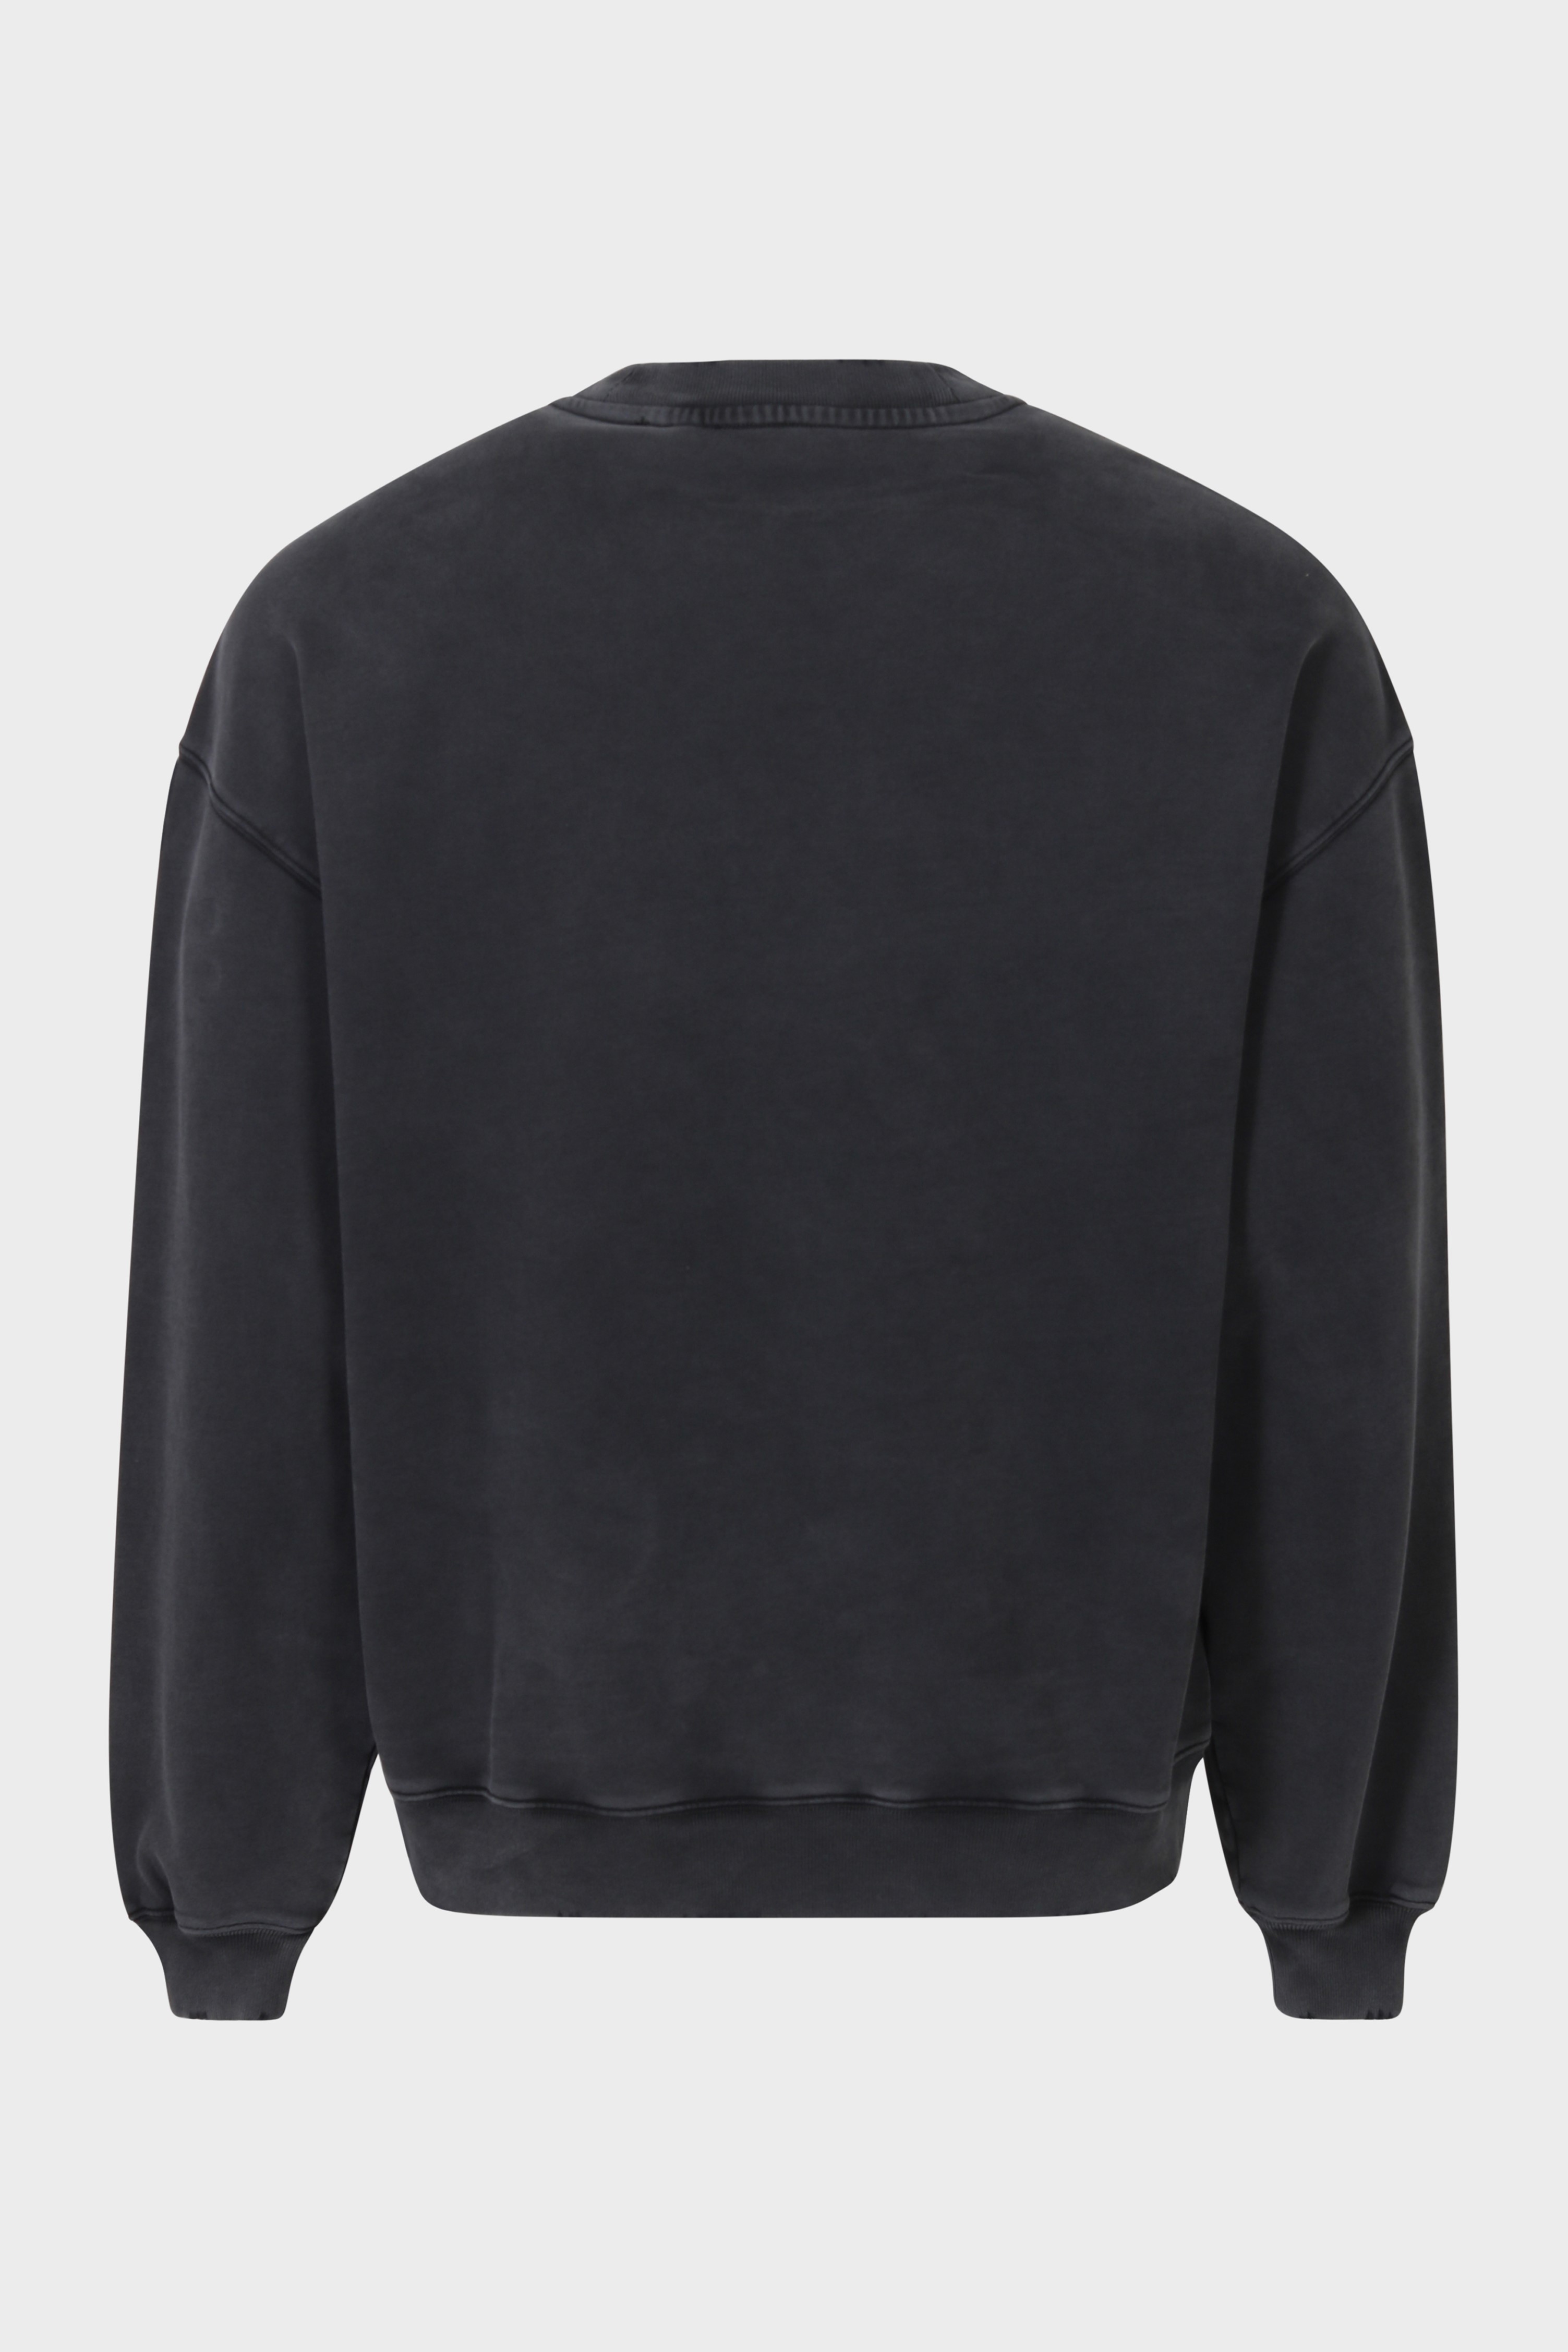 AXEL ARIGATO Wes Distrezzed Sweatshirt in Washed Black